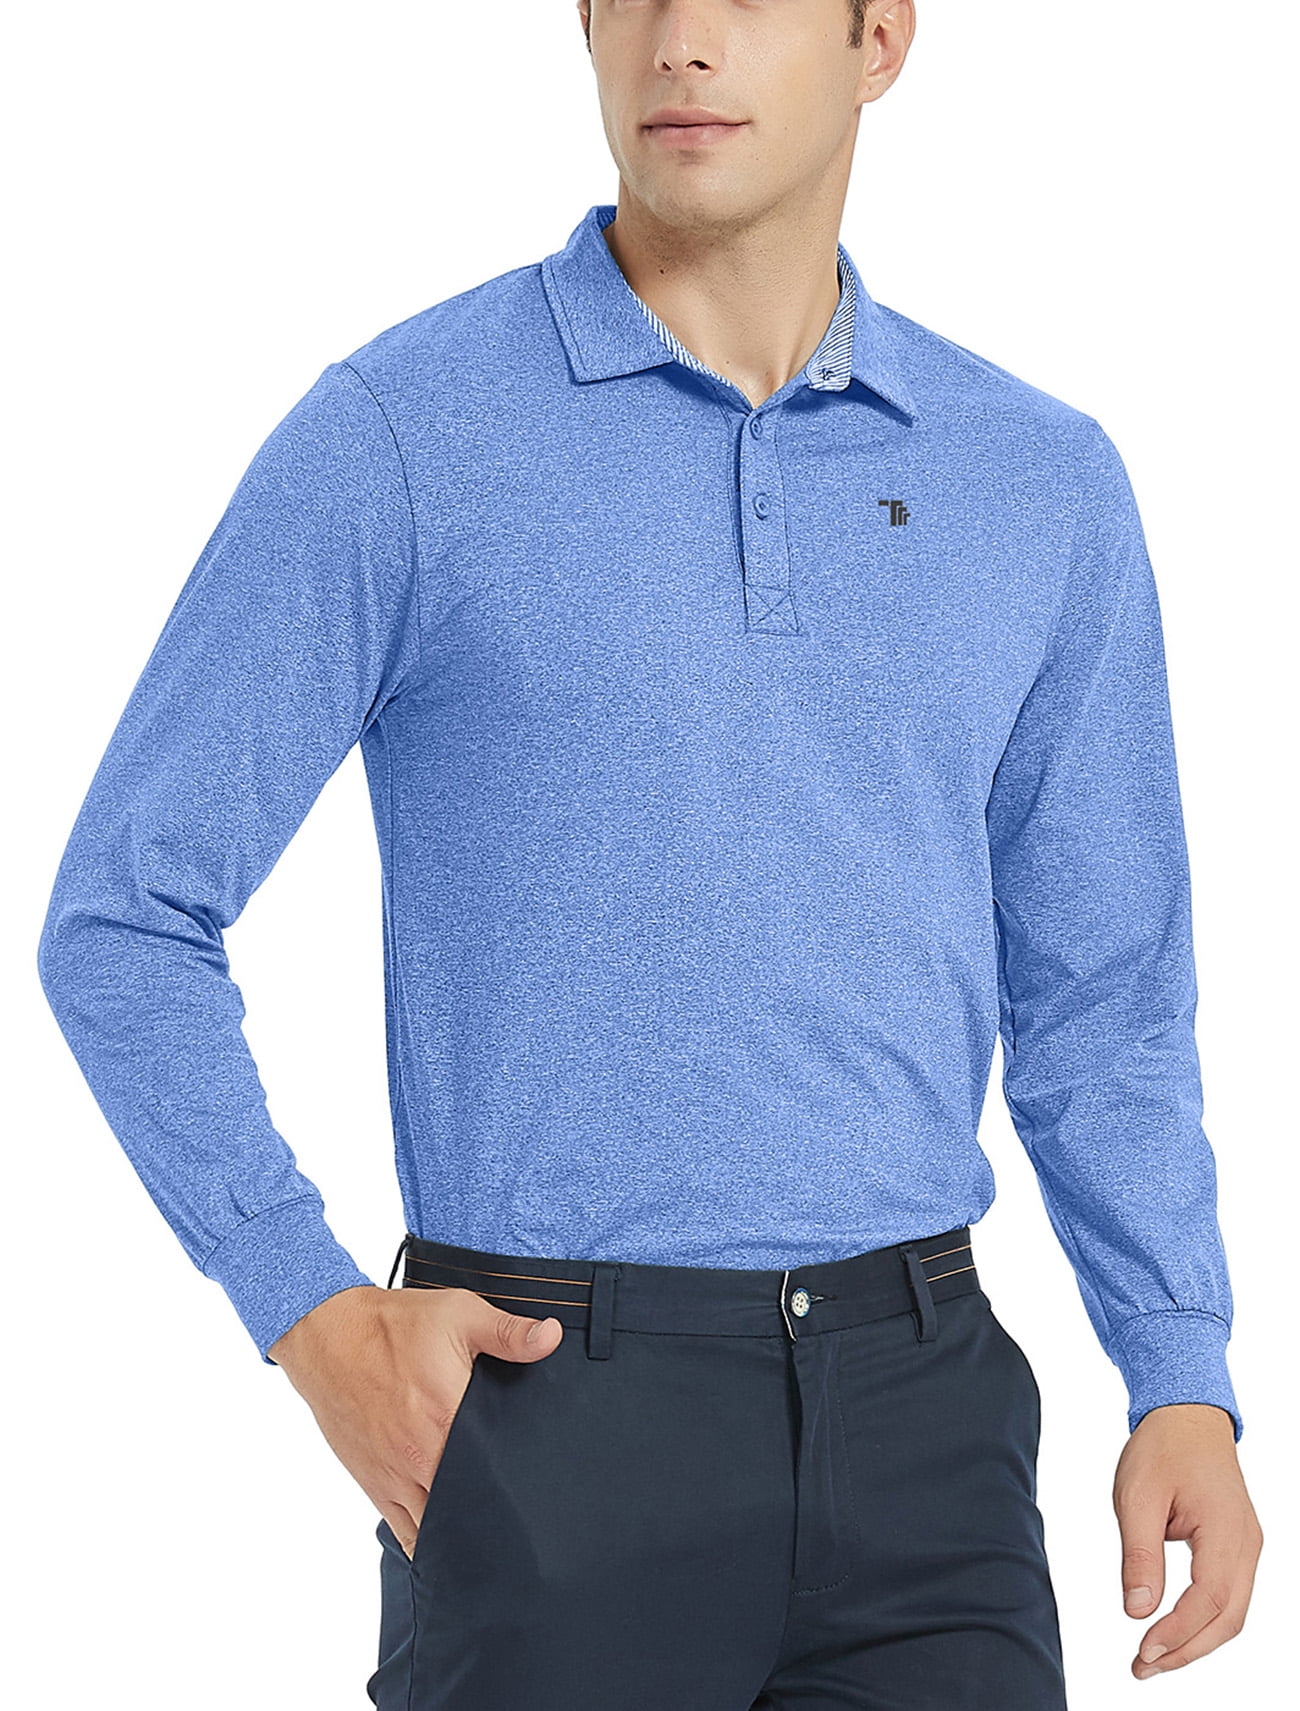 Mofiz Men's Golf Shirts Long Sleeve Sports Polo Shirts Athletic Shirts ...